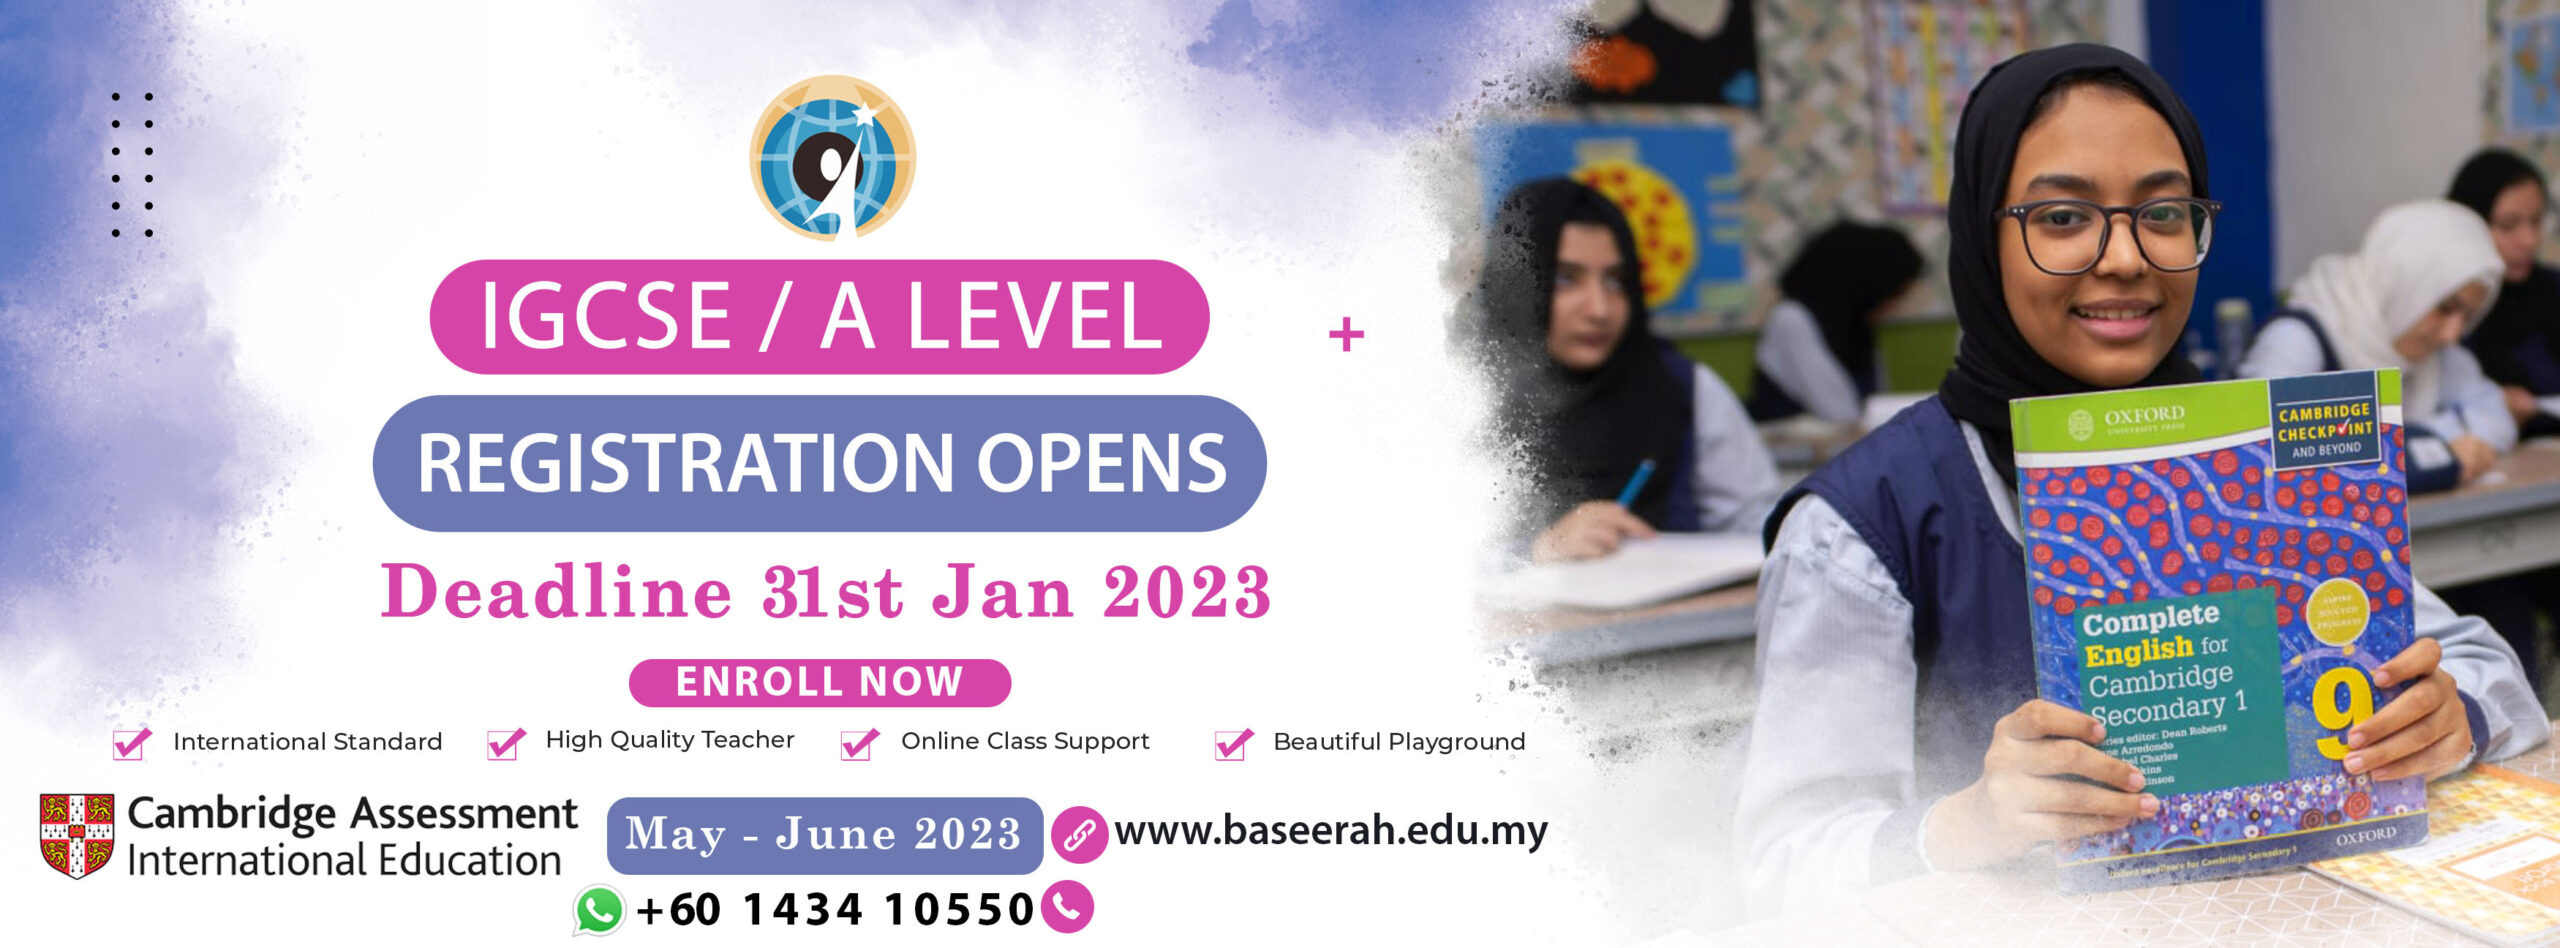 Home Page - Baseerah International School Malaysia